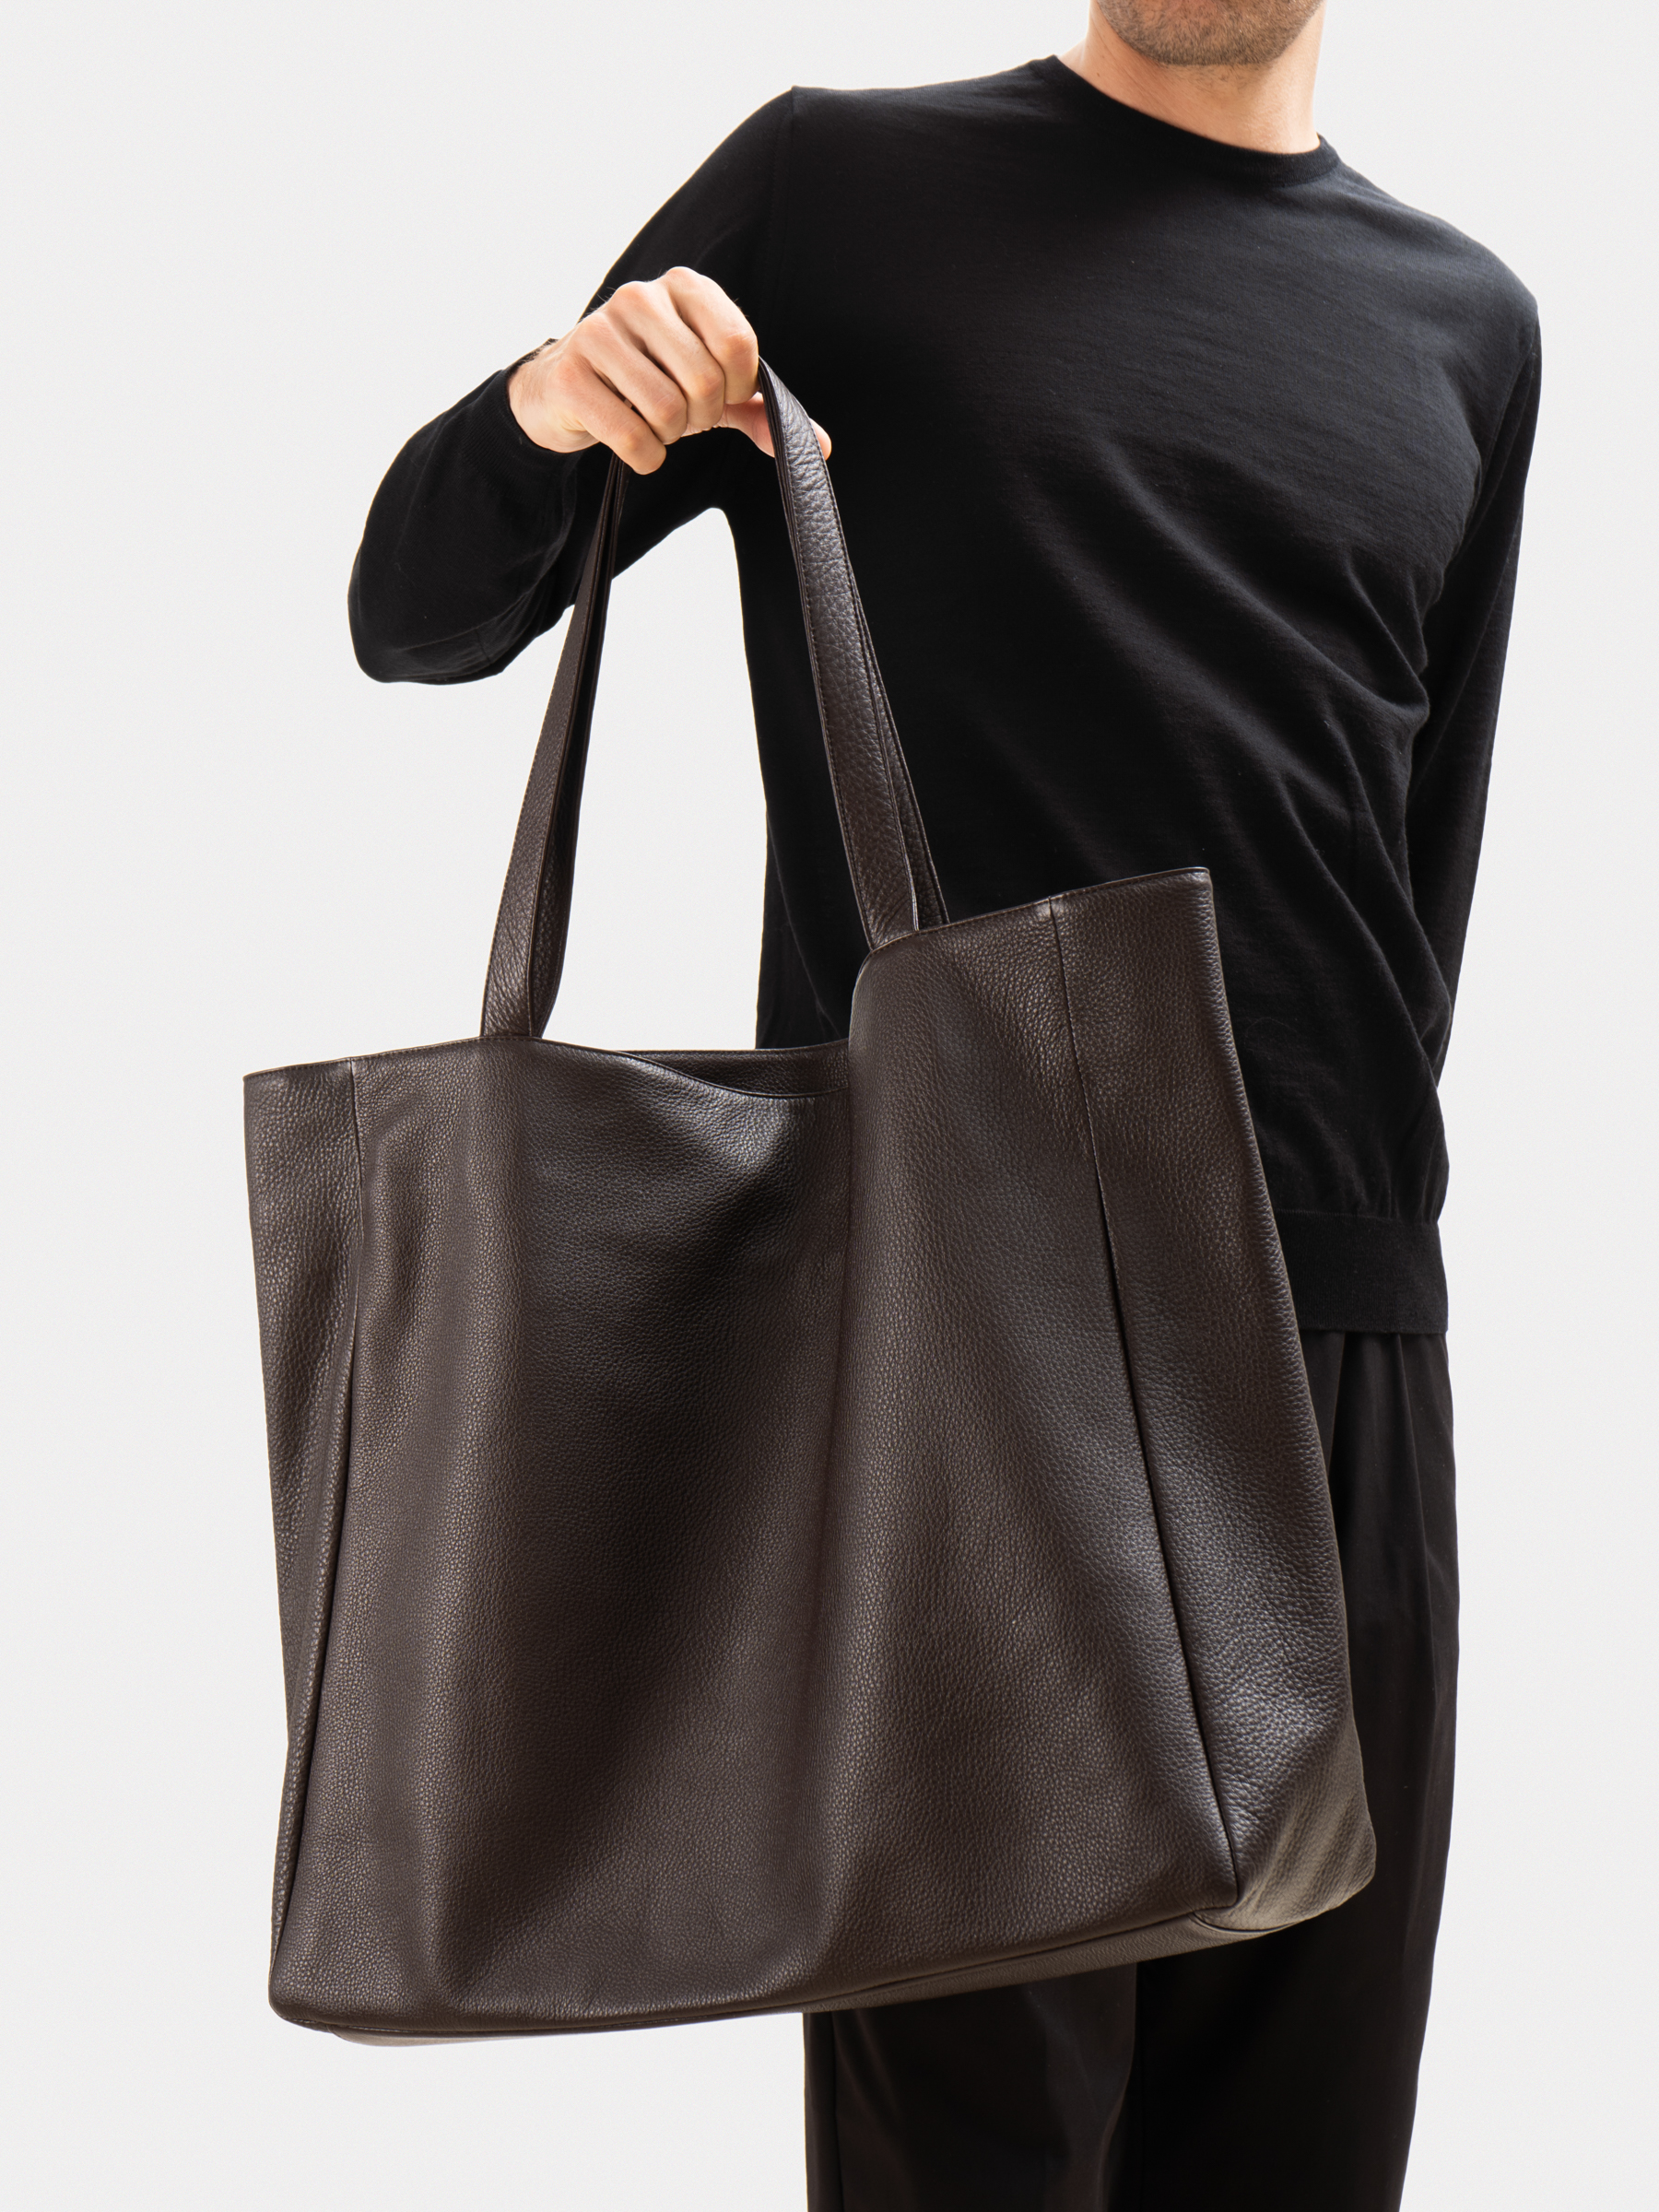 FABER ONE shoulder bag in dark brown calfskin leather | TSATSAS